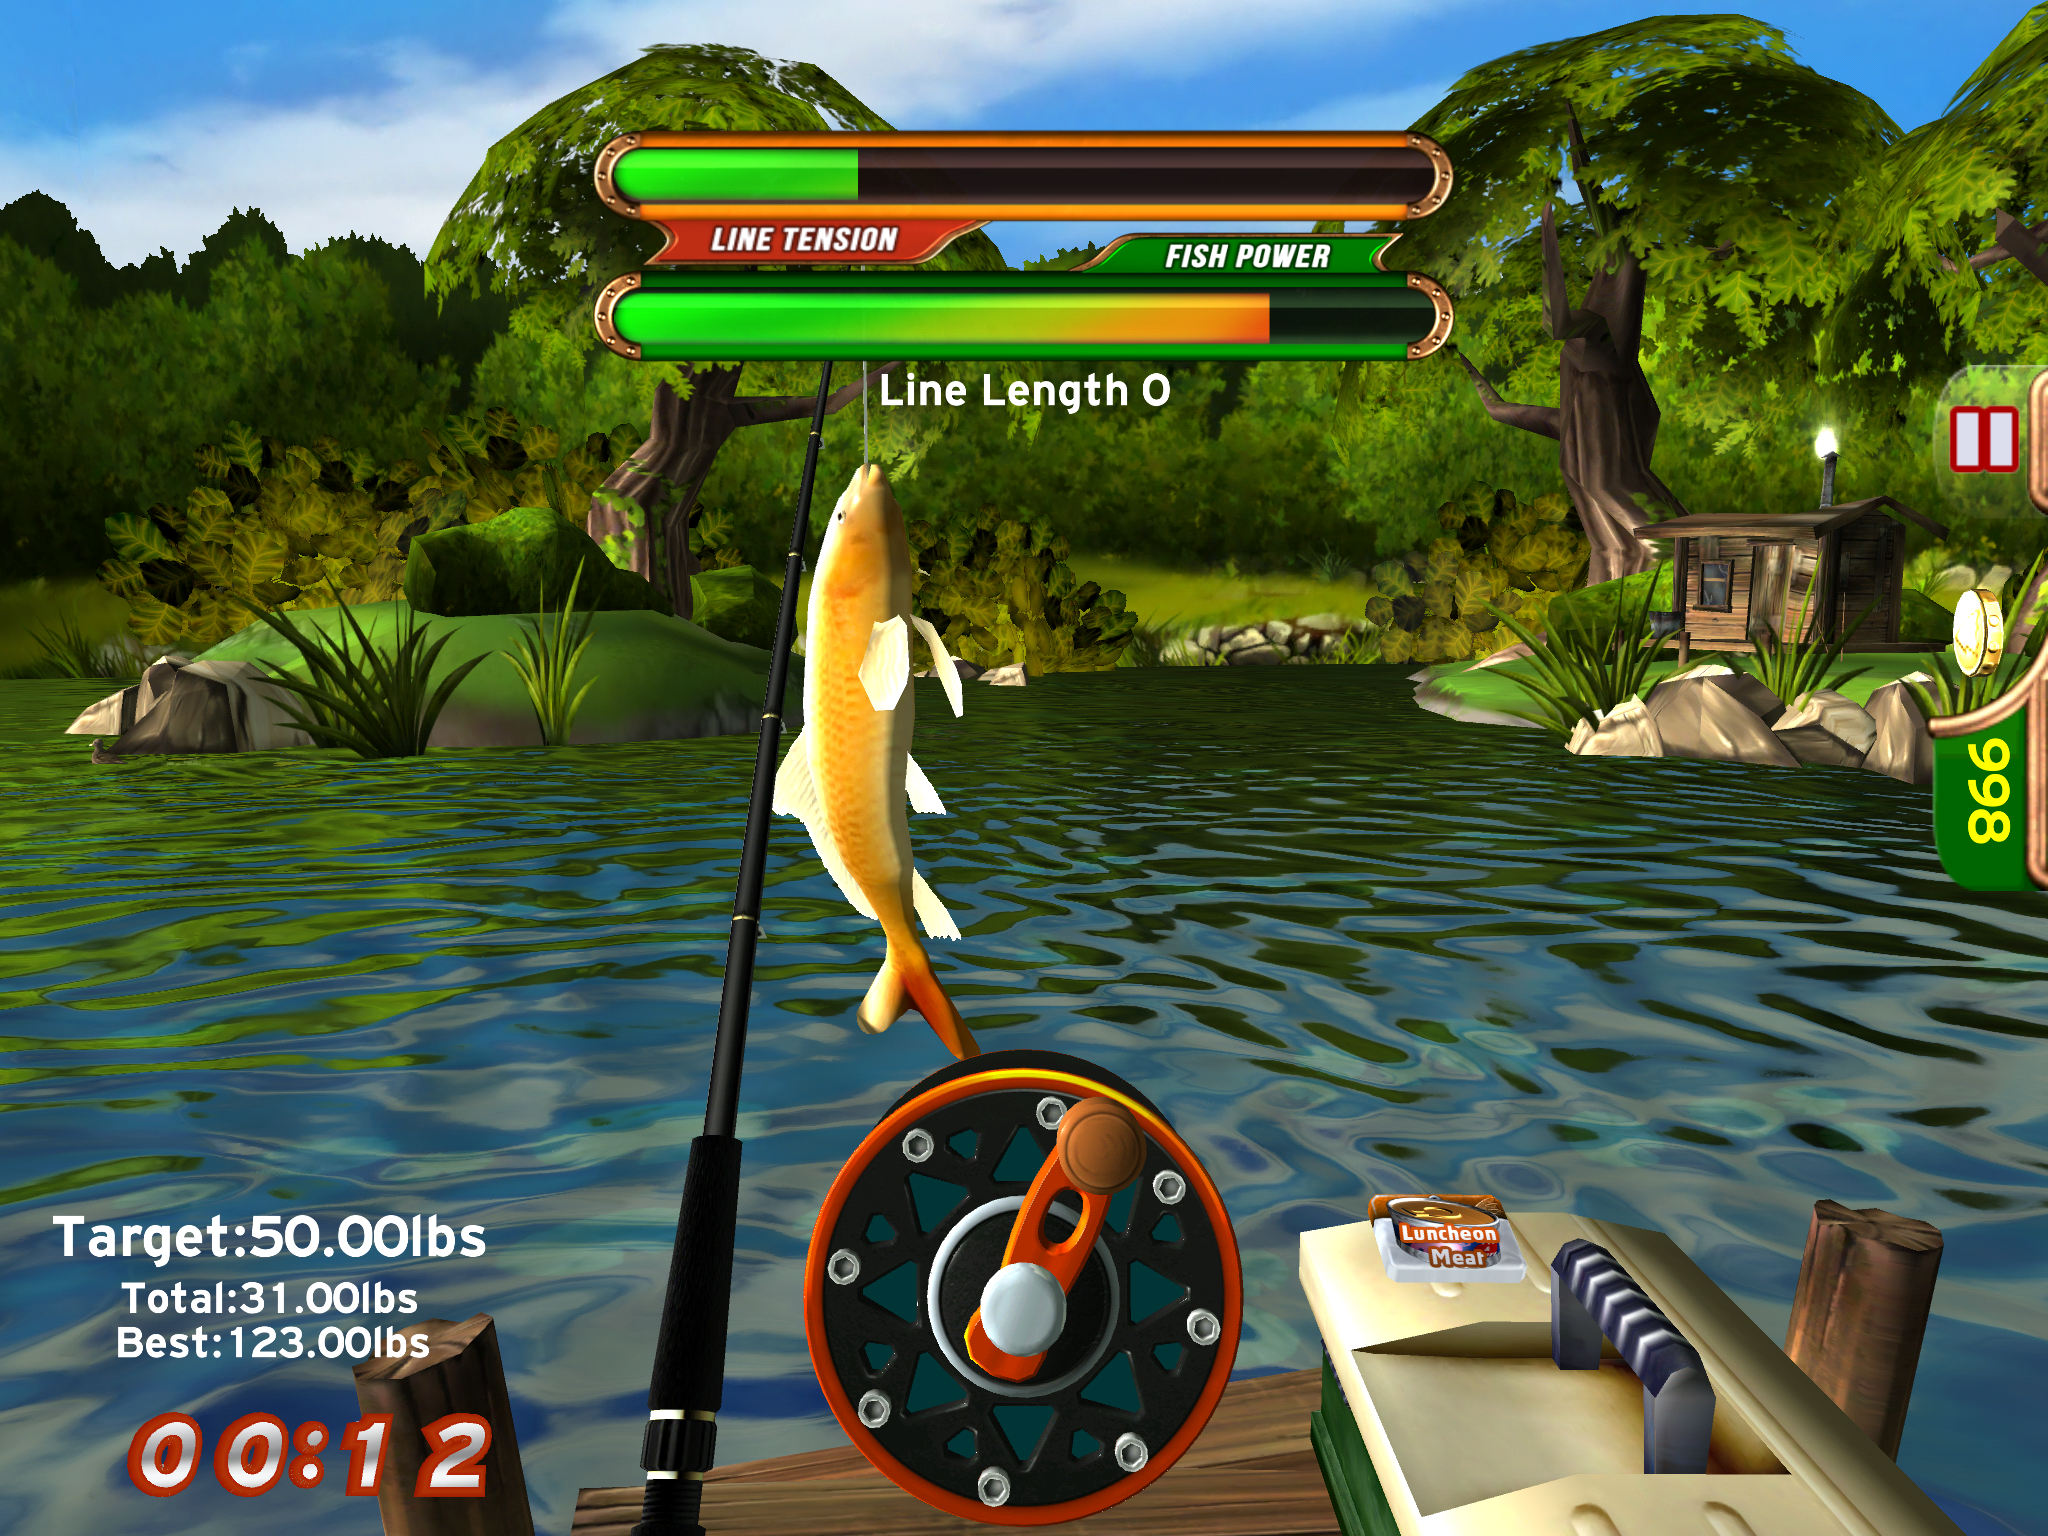 Exquisite fishing game. Игра рыбалка. Игра рыбалка для взрослых. Игра рыбалка фишинг. Игры про рыбалку на смартфон.